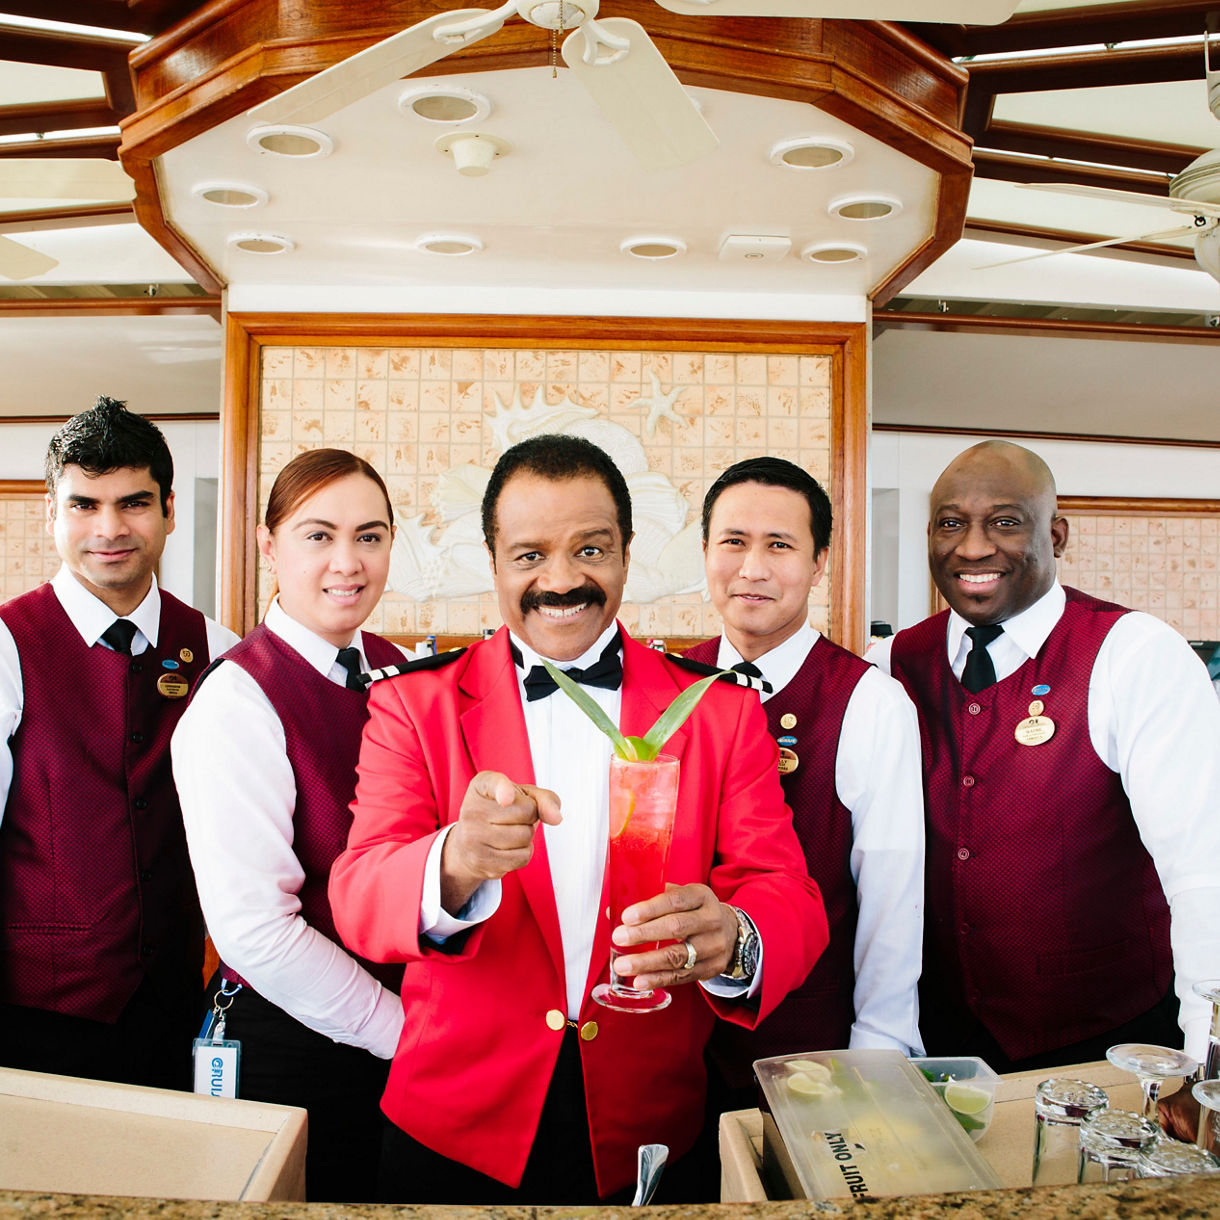 Casino Jobs on Cruise Ships